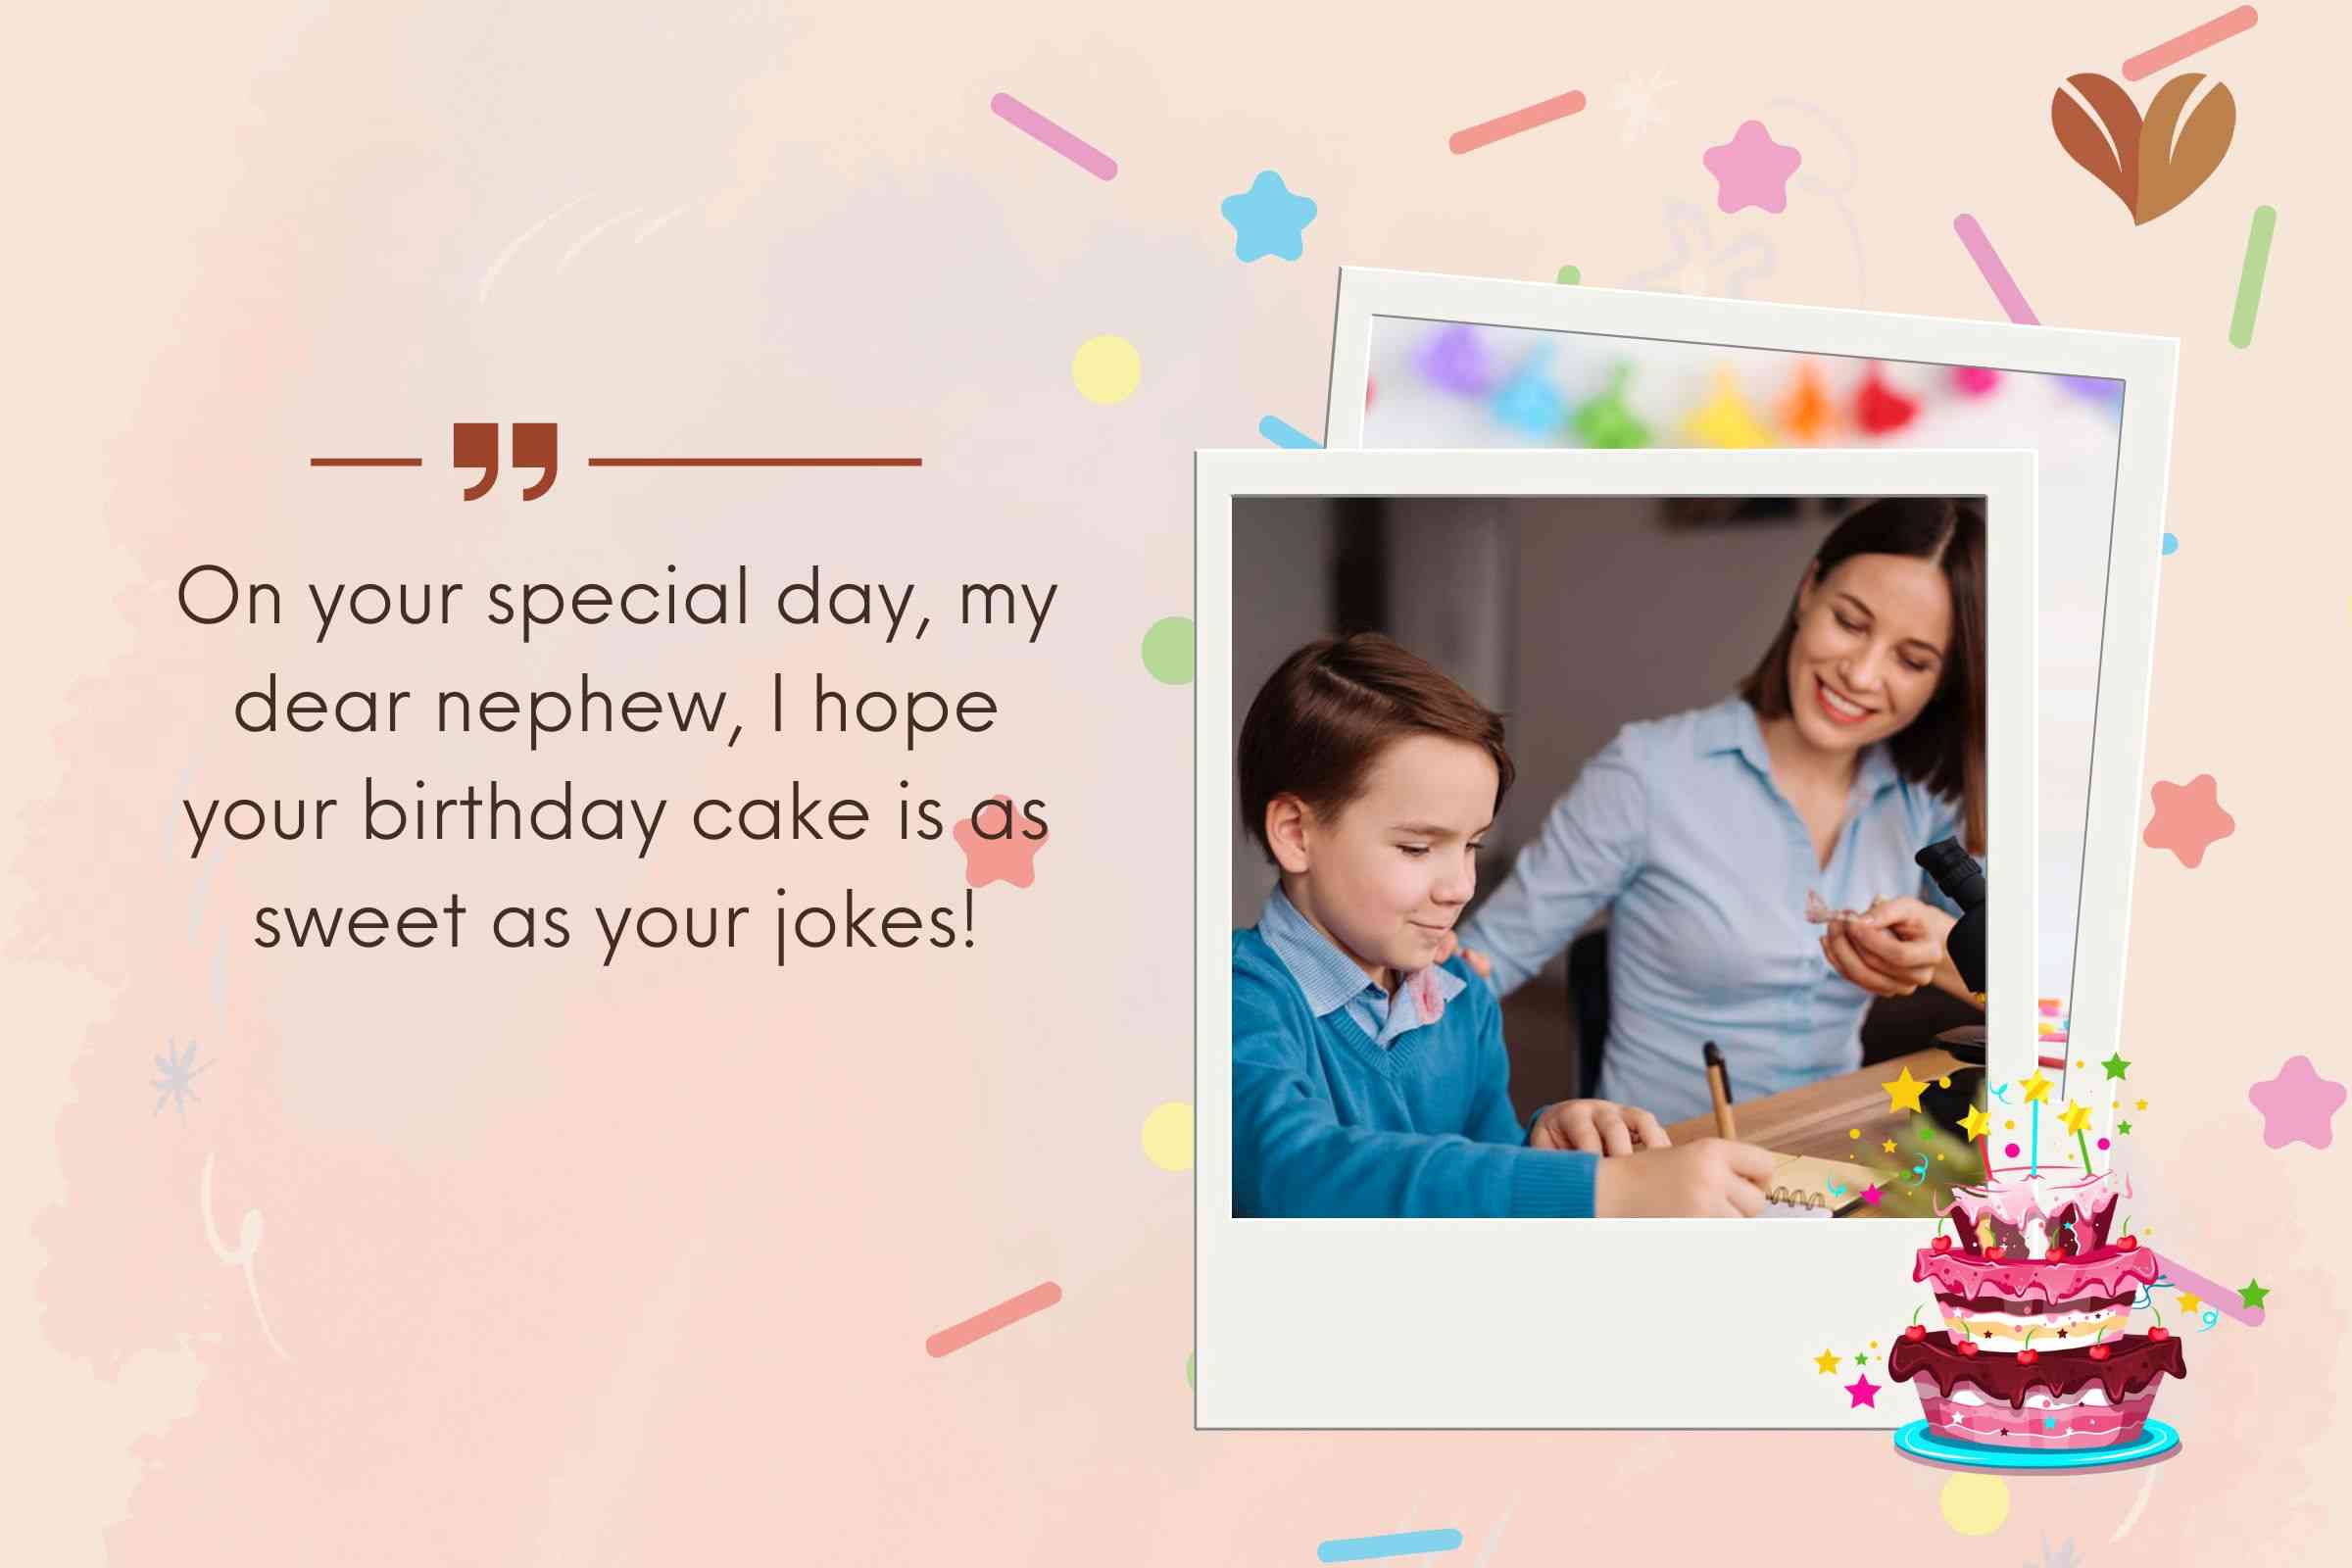 Heartfelt nephew's birthday wishes